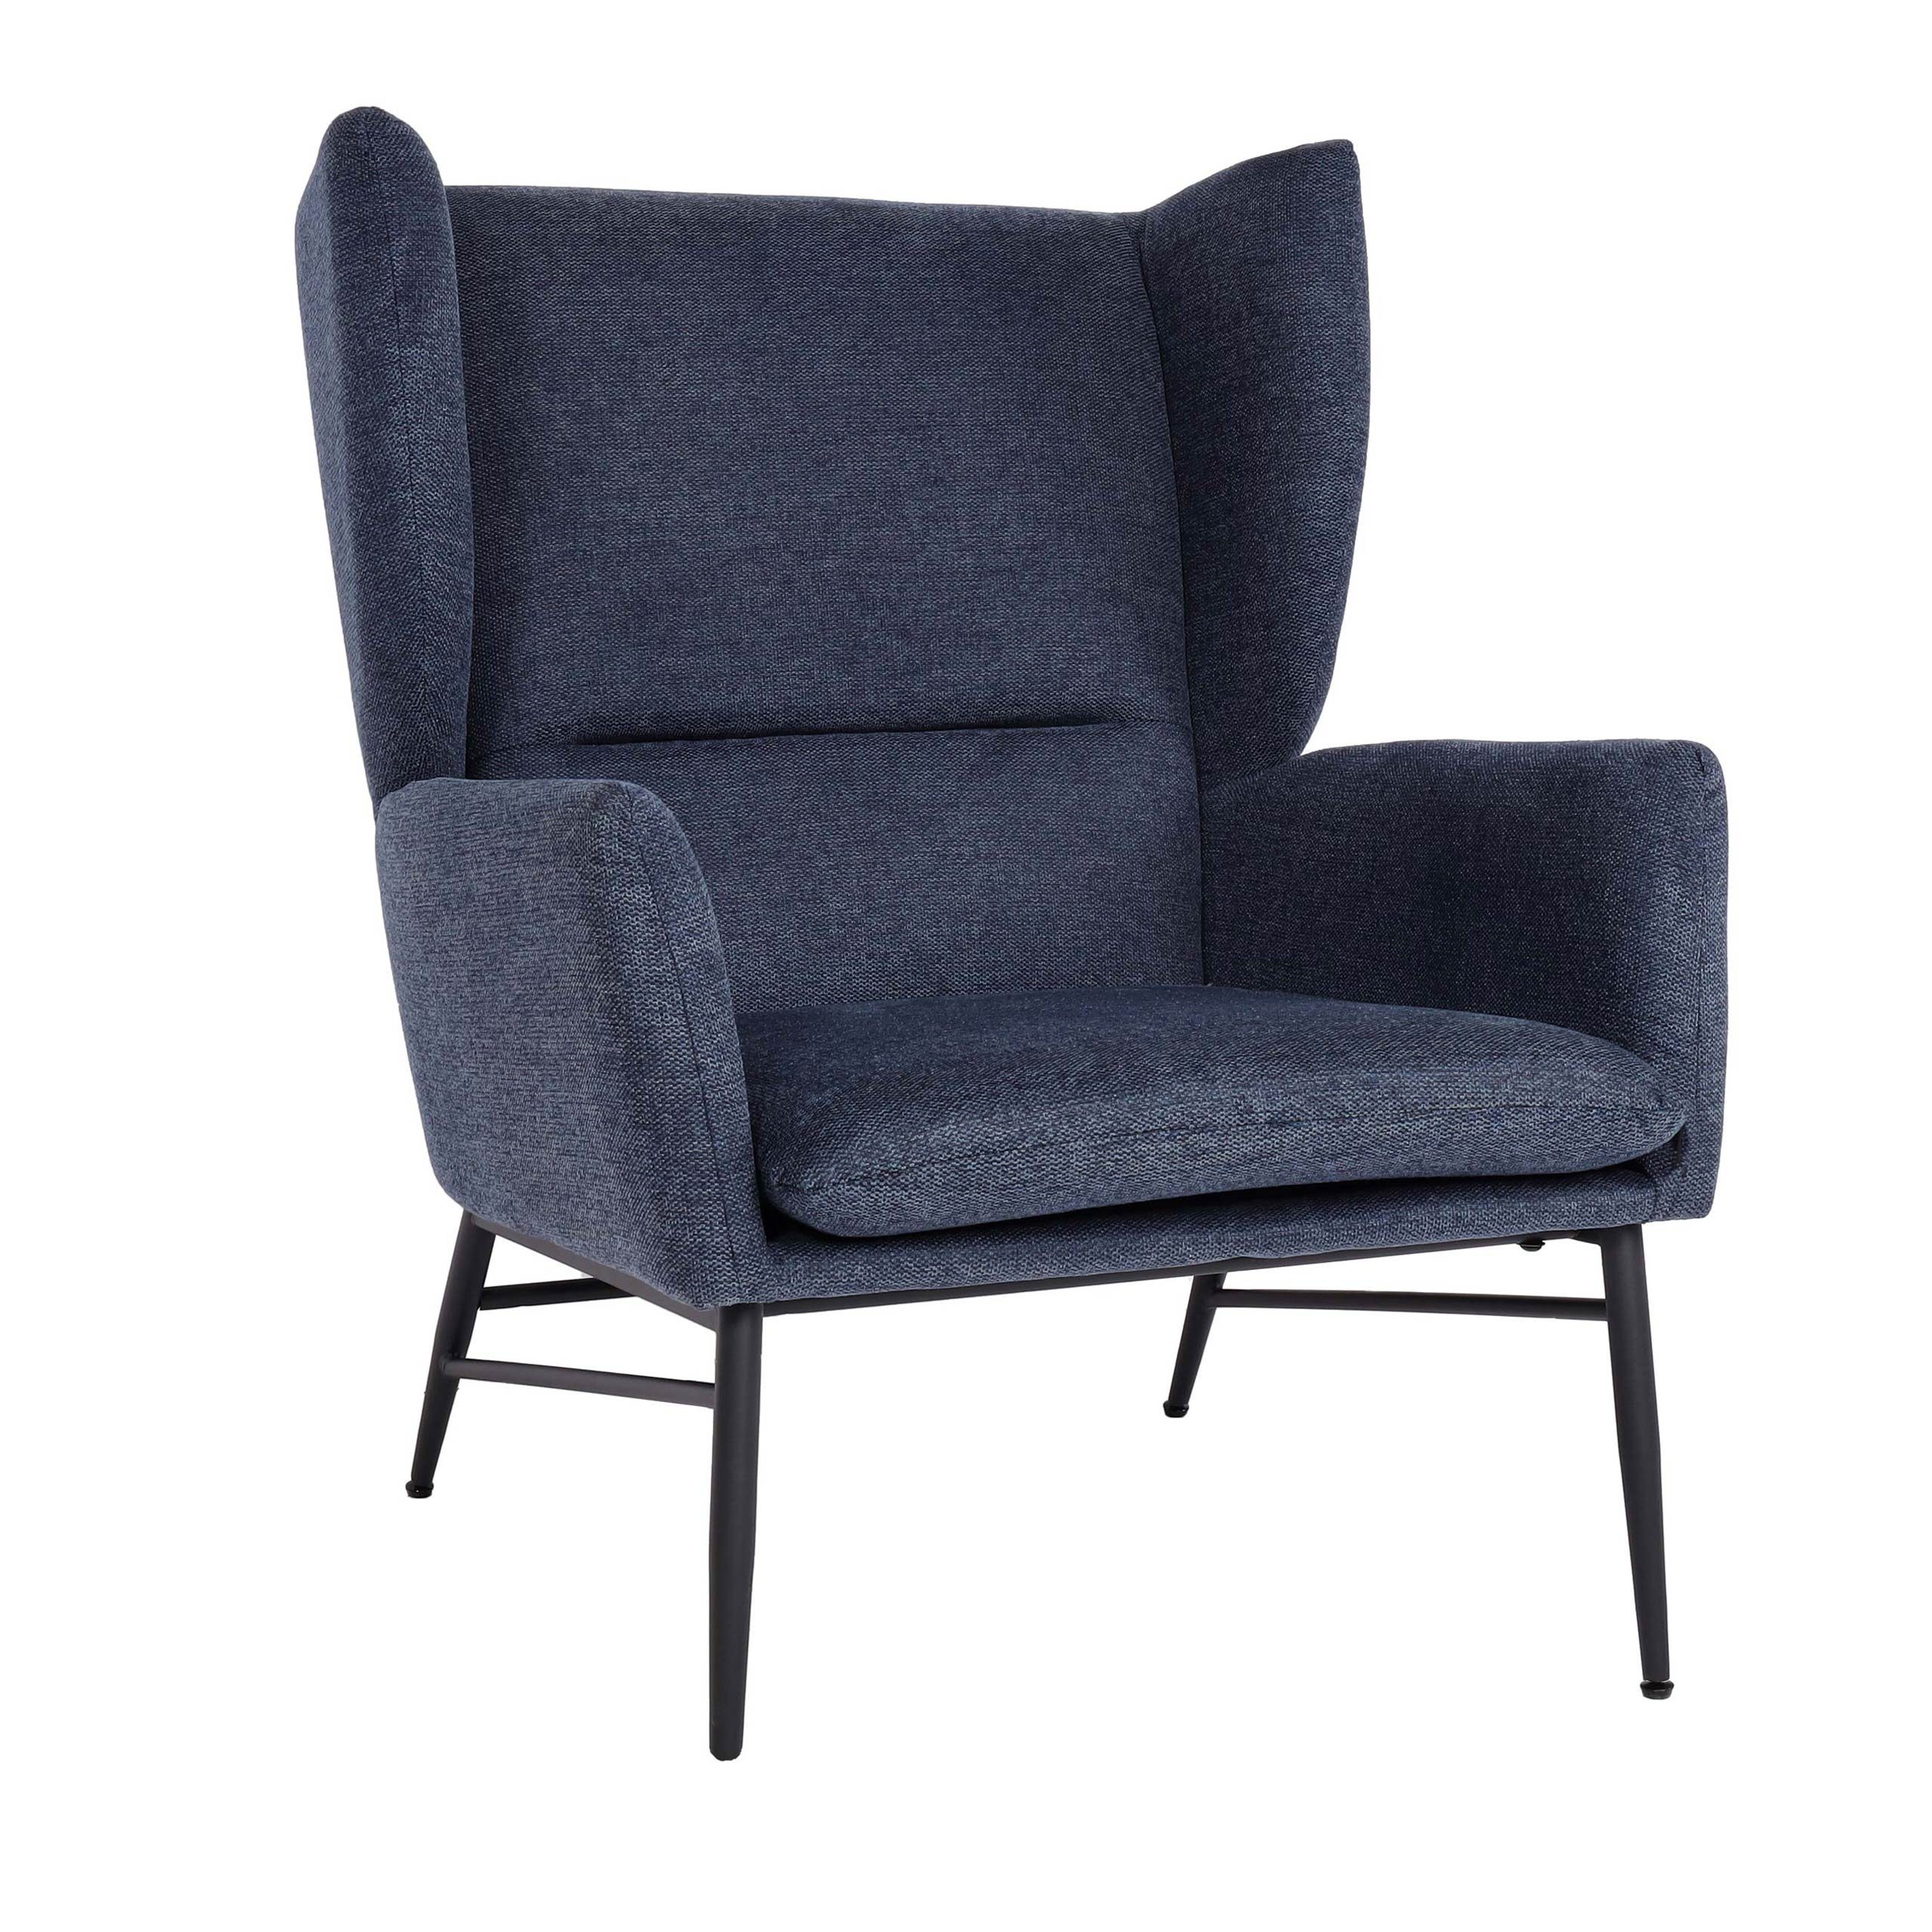 MCW Loungesessel MCW-L62, Extra breite Sitzfläche, Sitzkissen abnehmbar blau